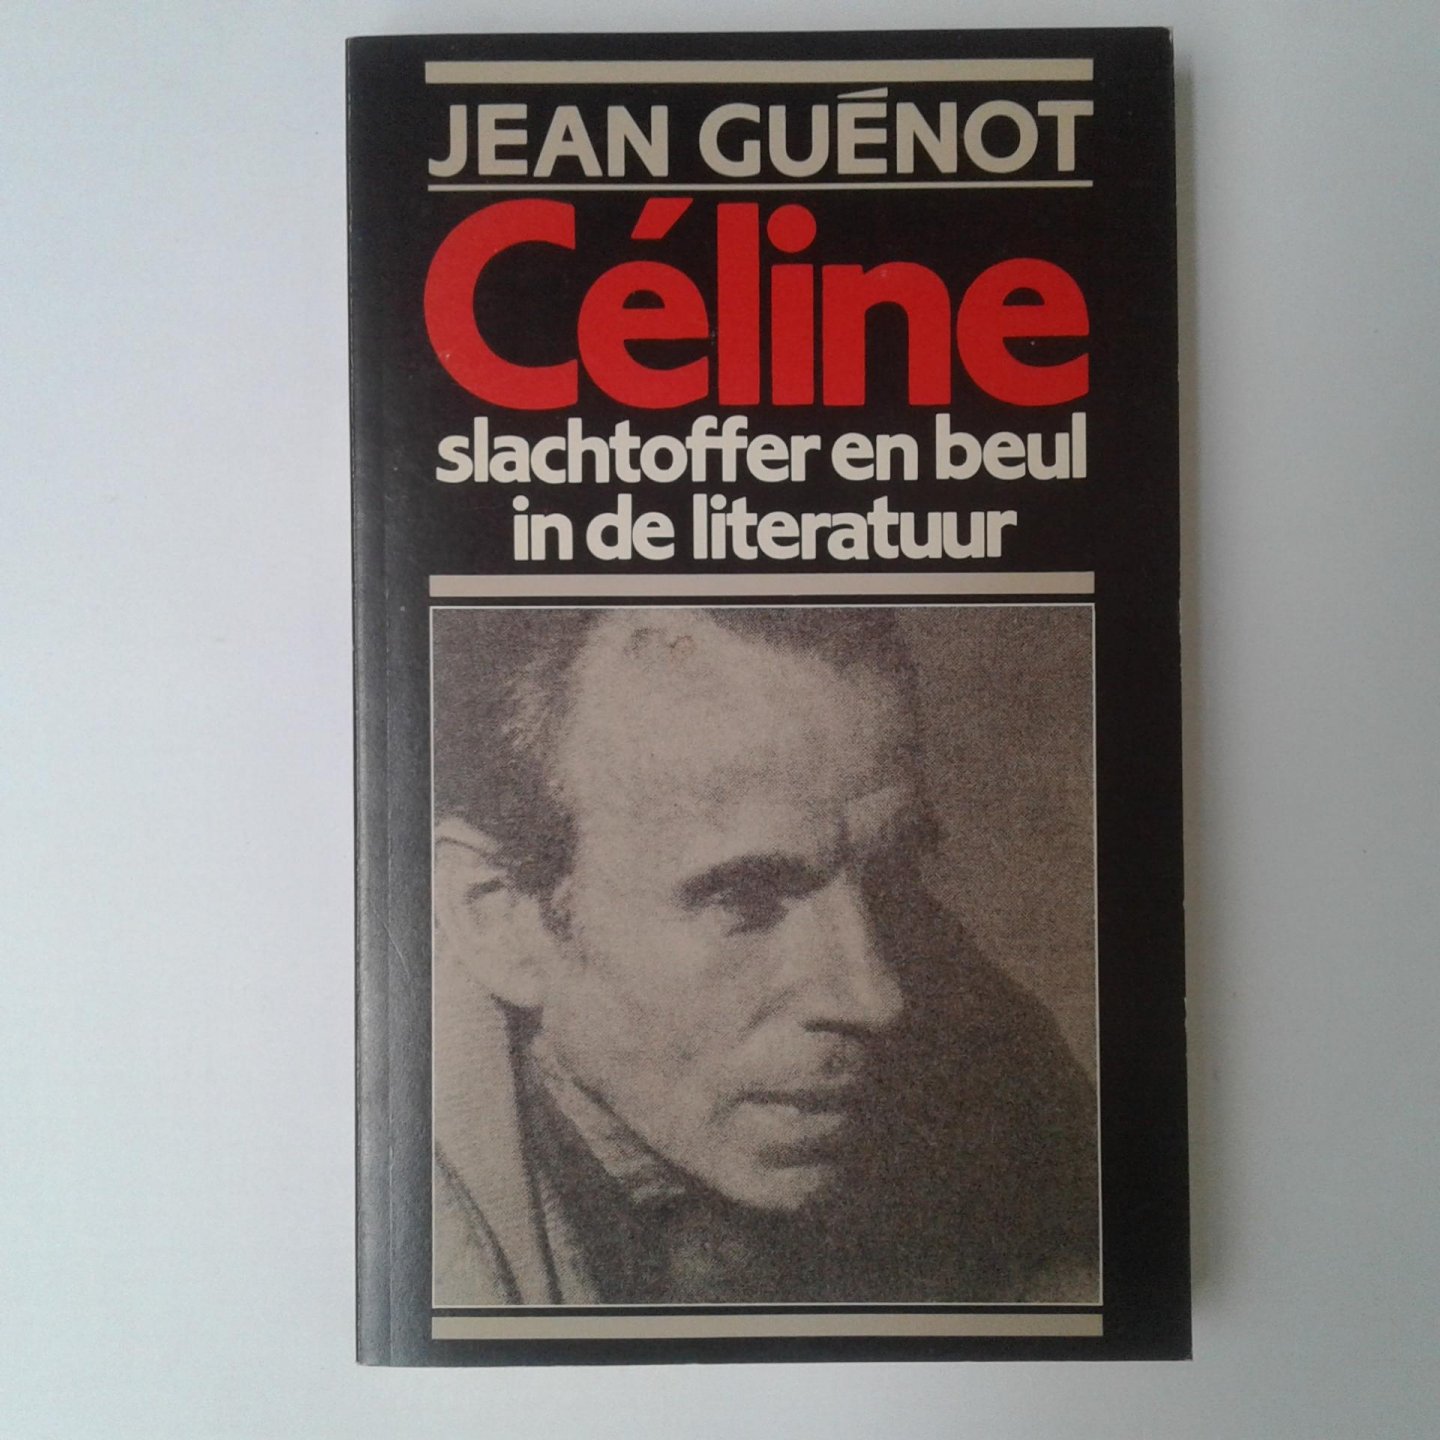 Guenot, Jean - Celine, slachtoffer beul in de literatuur